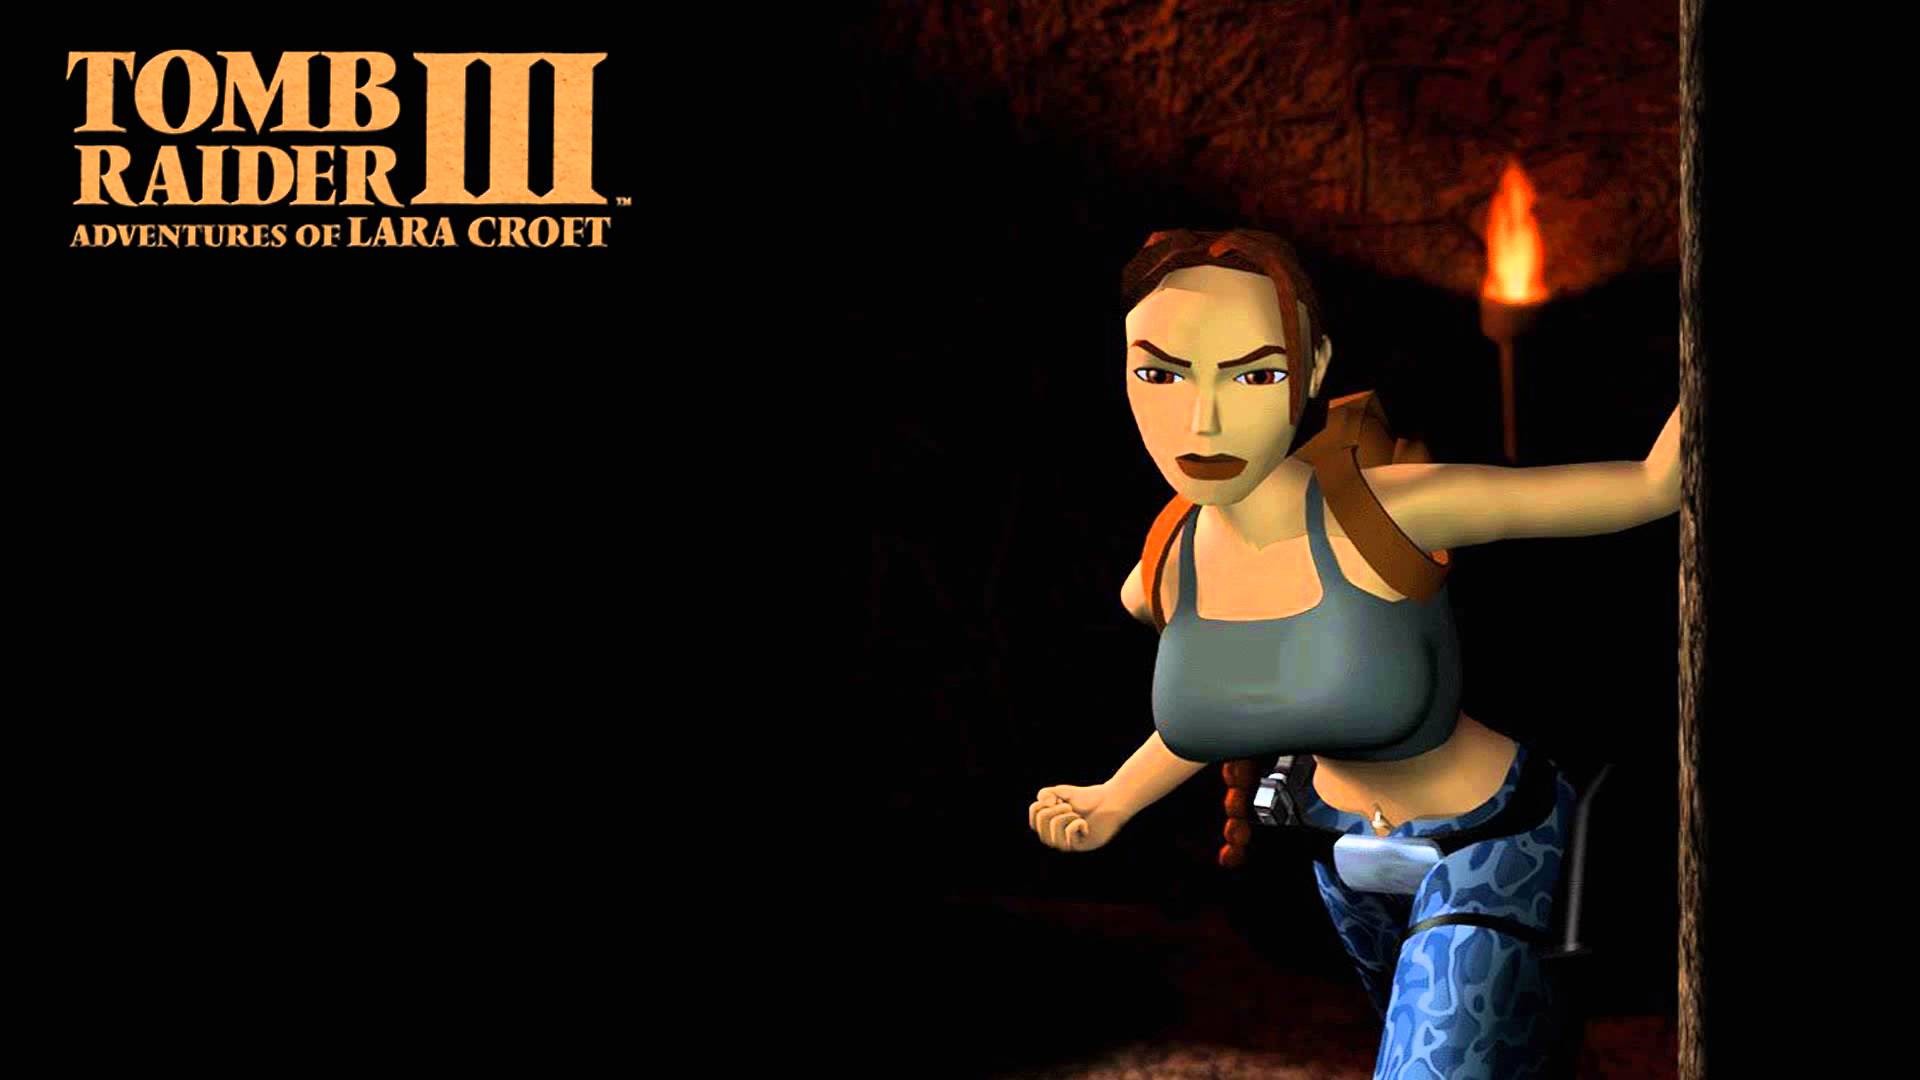 General 1920x1080 women Tomb Raider III video games boobs big boobs video game girls redhead PC gaming Lara Croft (Tomb Raider) video game characters